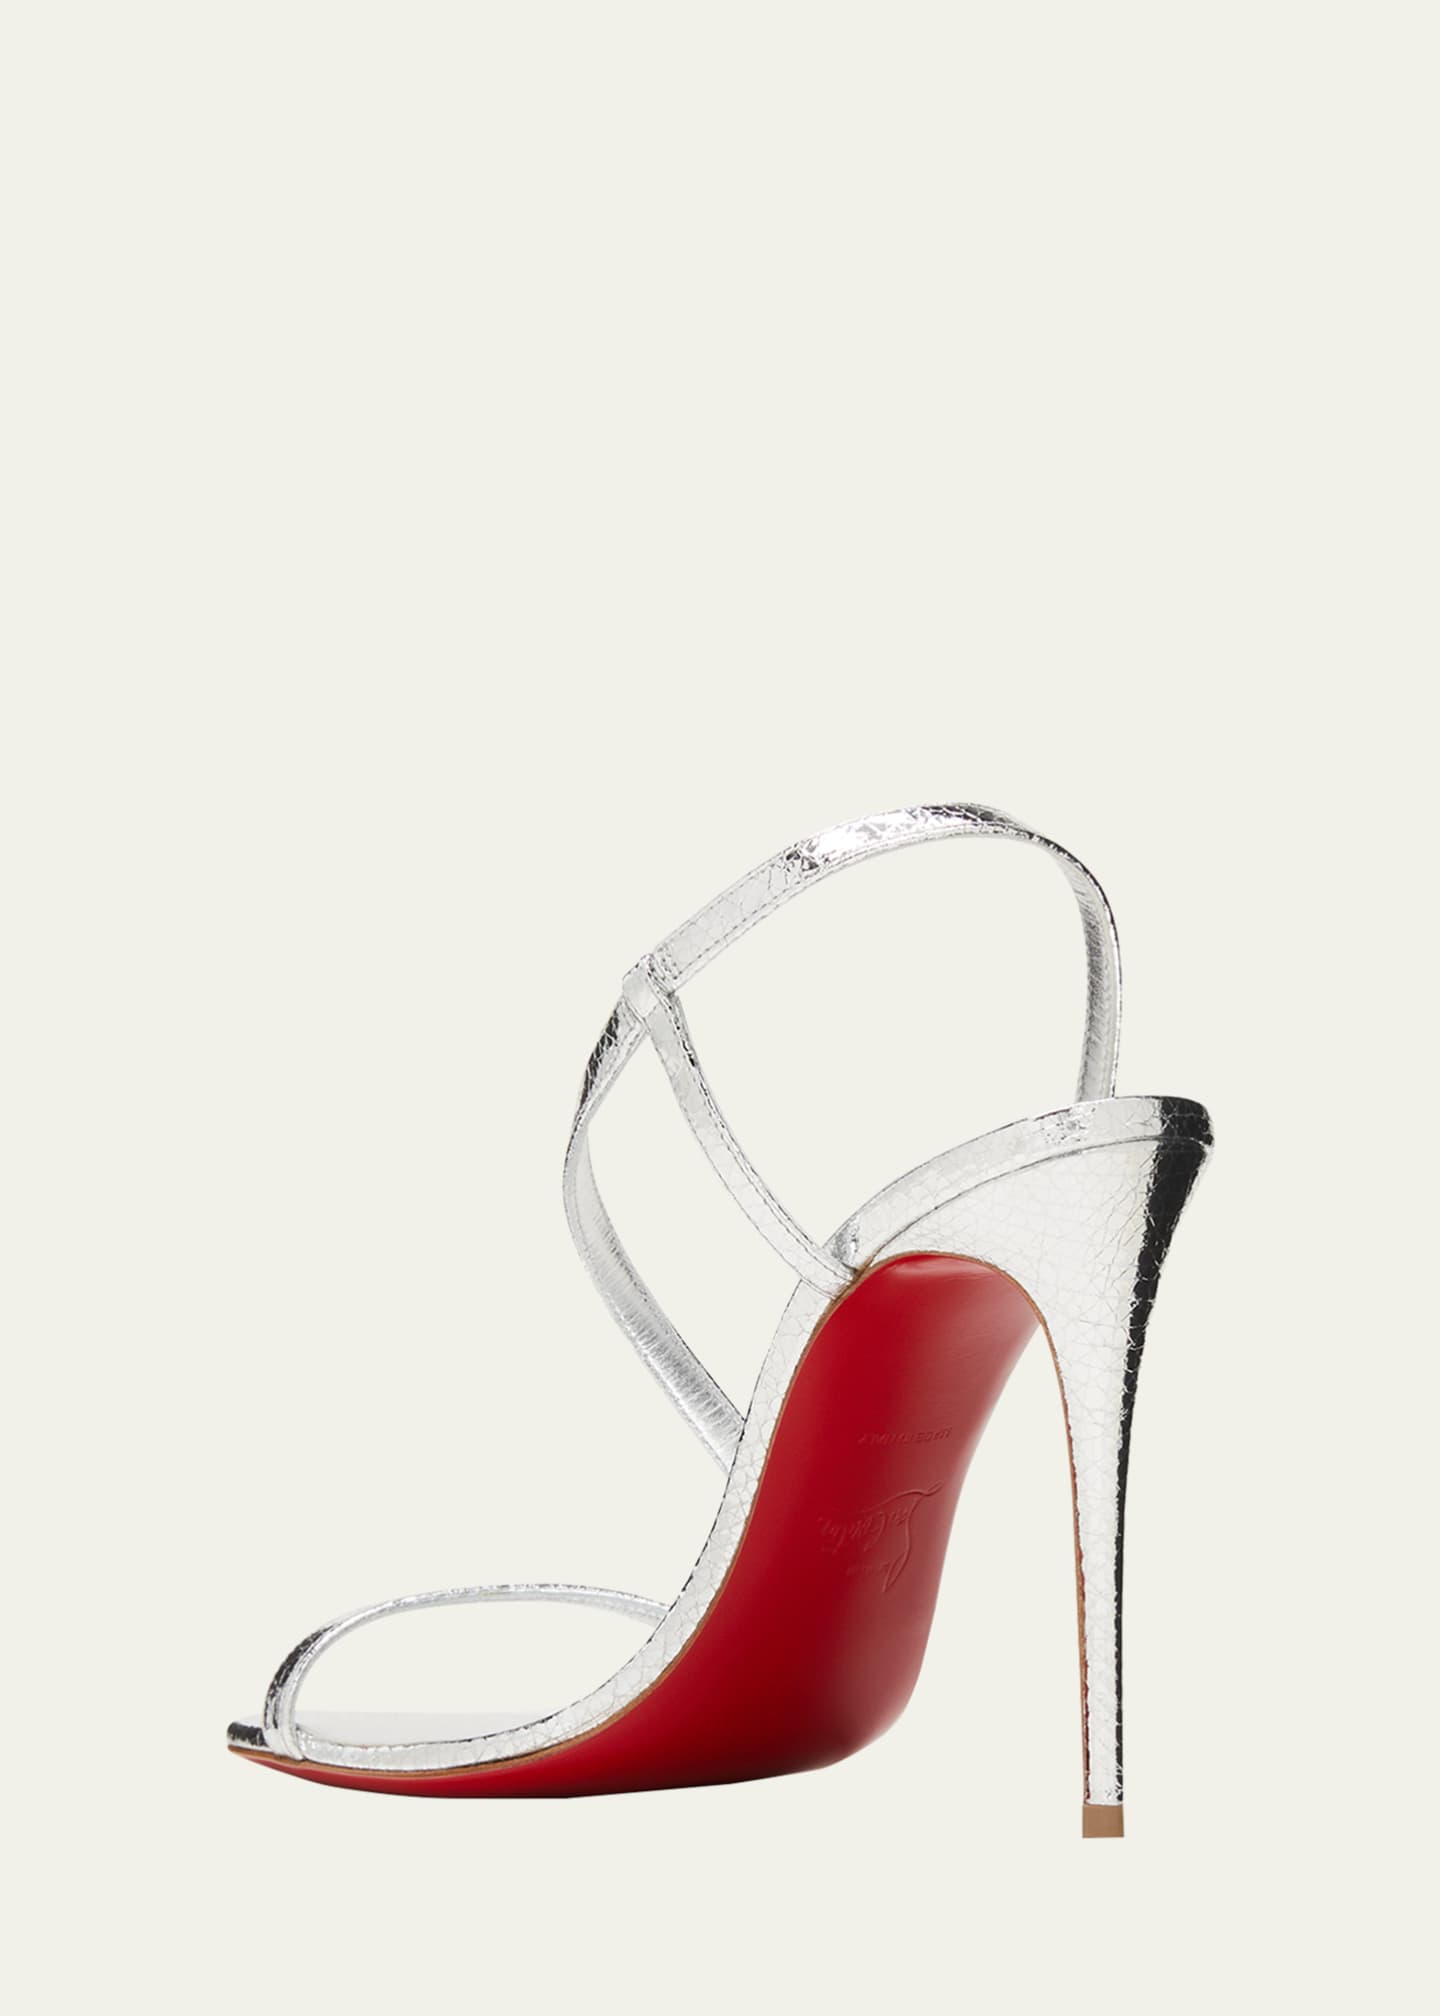 Christian Louboutin Rosalie Metallic Red Sole Stiletto Sandals